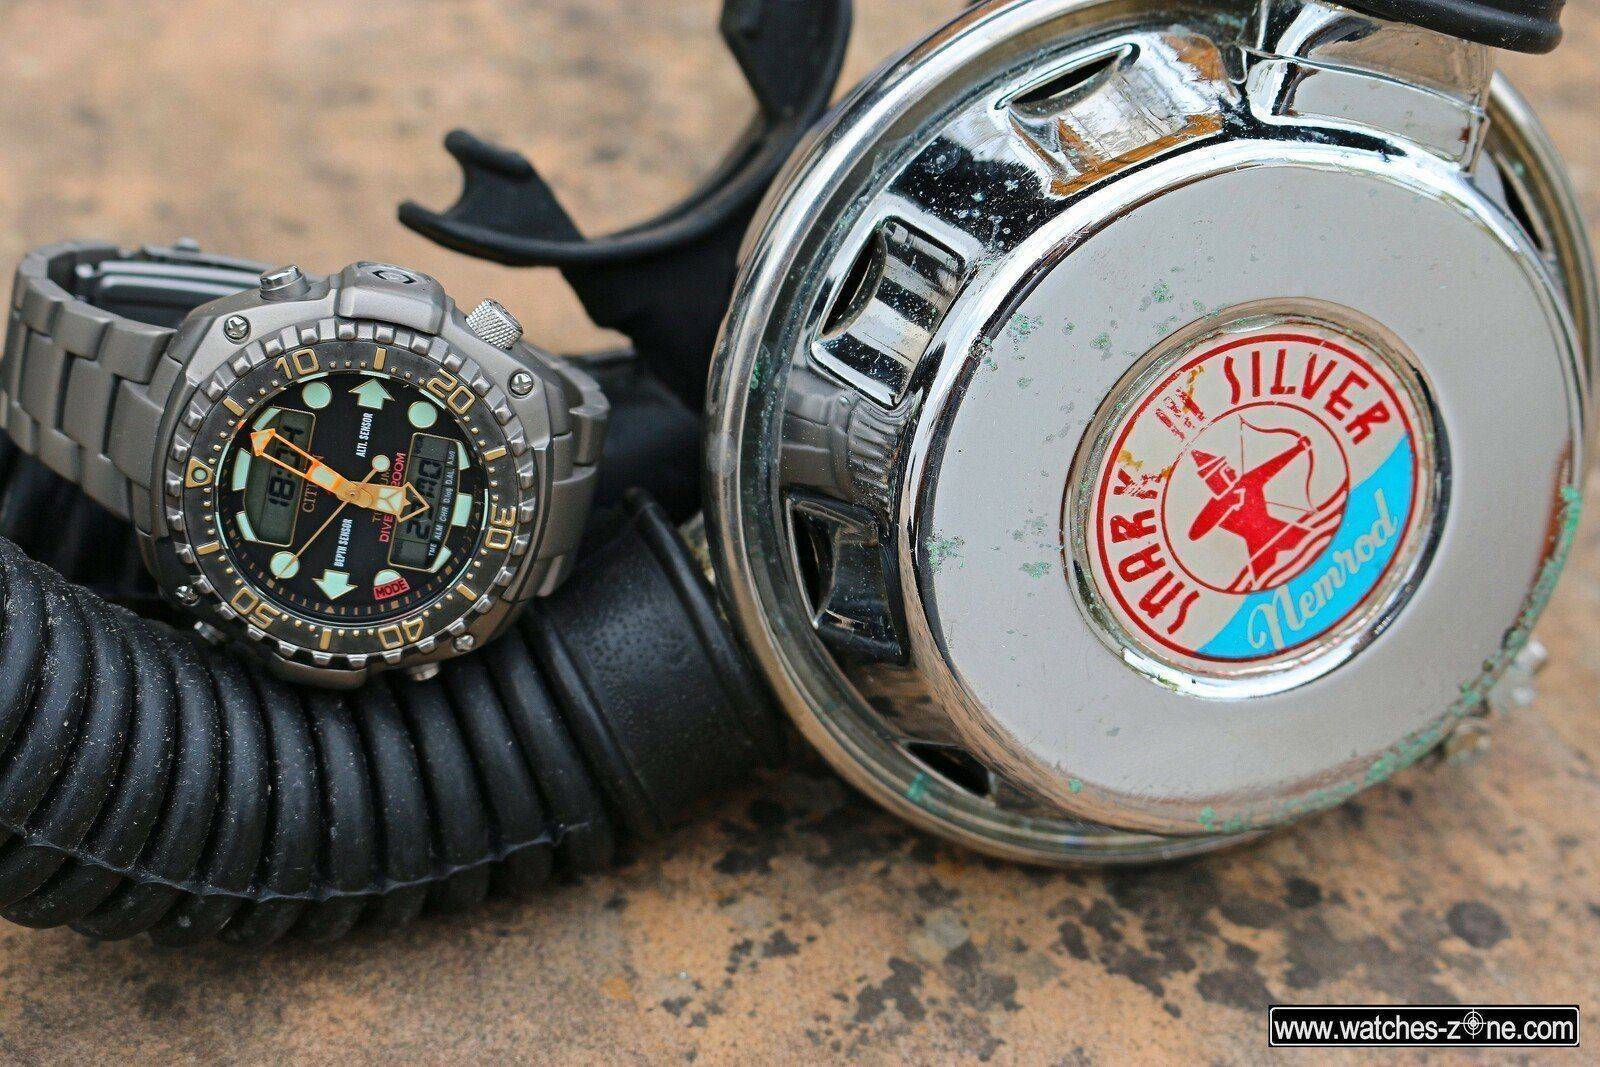 Reloj Certina automatico DS-2 - Relojeria Bukay